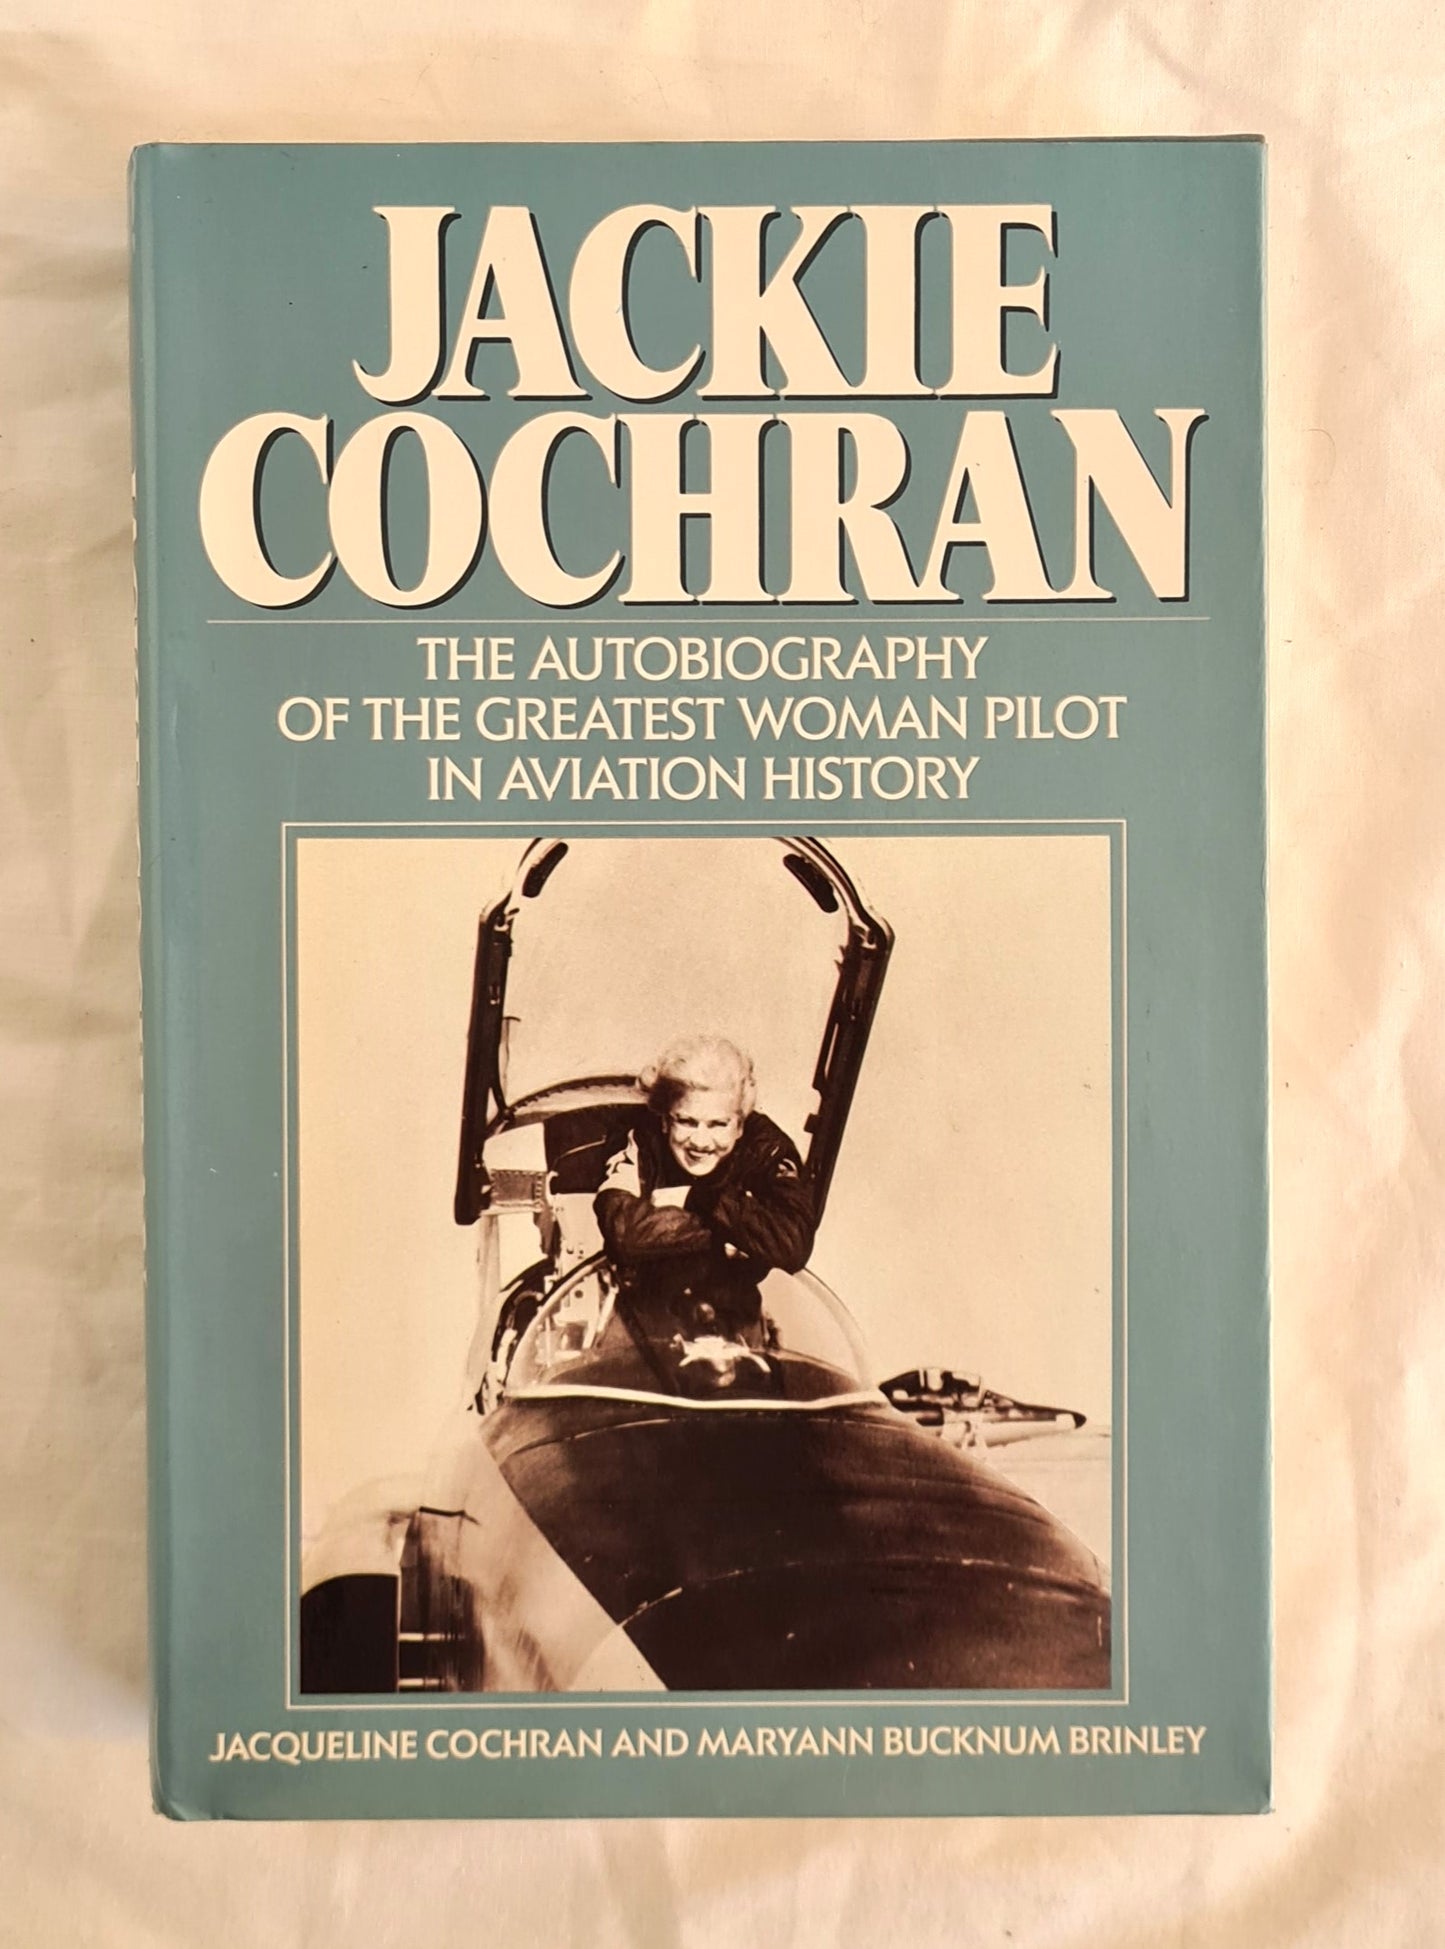 Jackie Cochran  An Autobiography  by Jacqueline Cochran and Maryann Bucknum Brinley